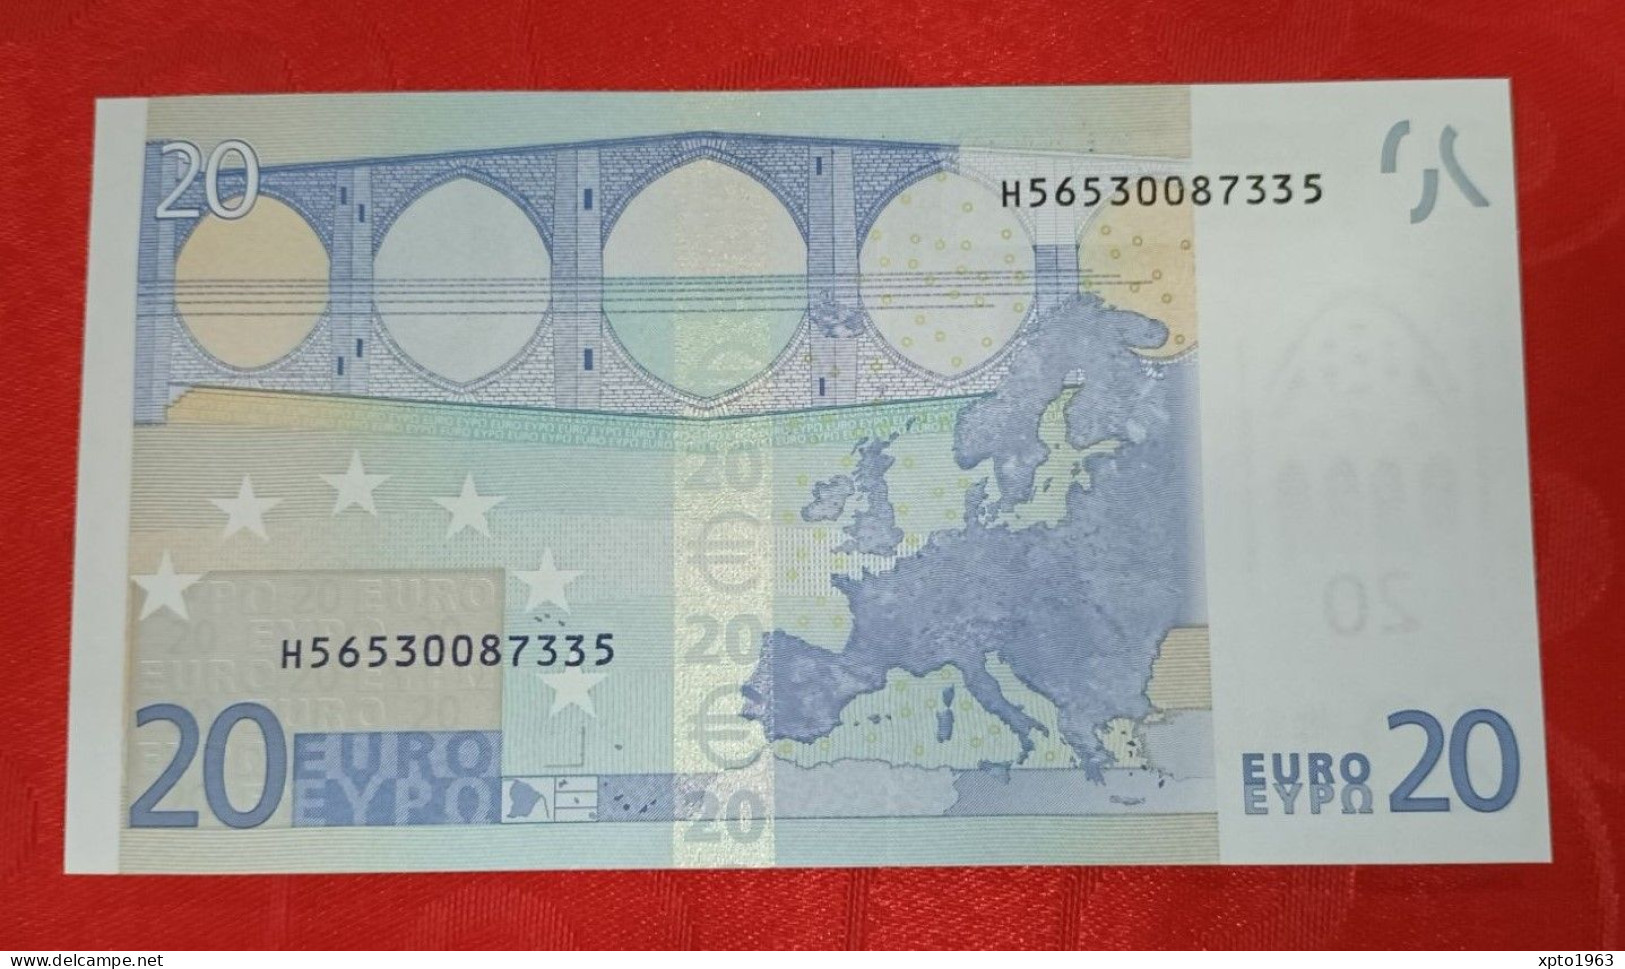 20 EURO - SLOVENIA -  G013 A1 - H56530087335 - NEUF - UNC - 20 Euro